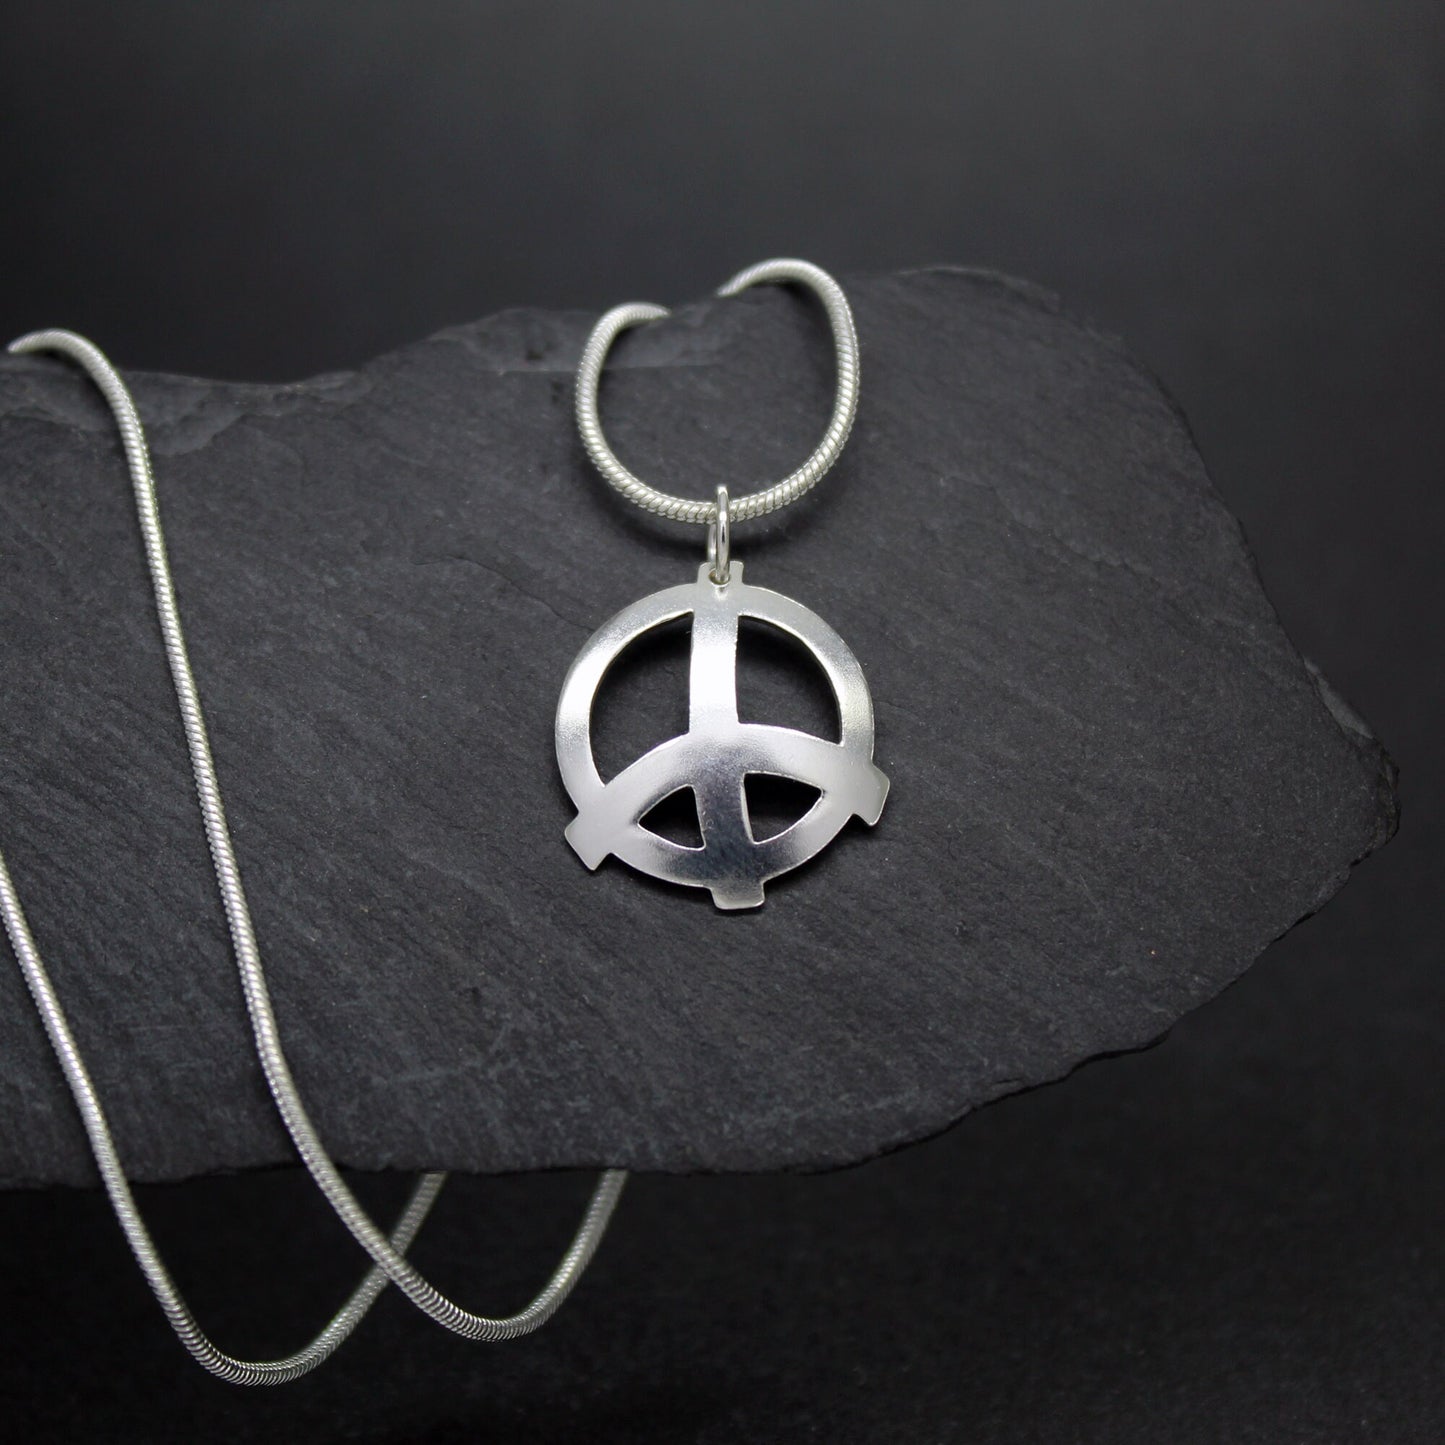 Peace symbol 925 silver pendant